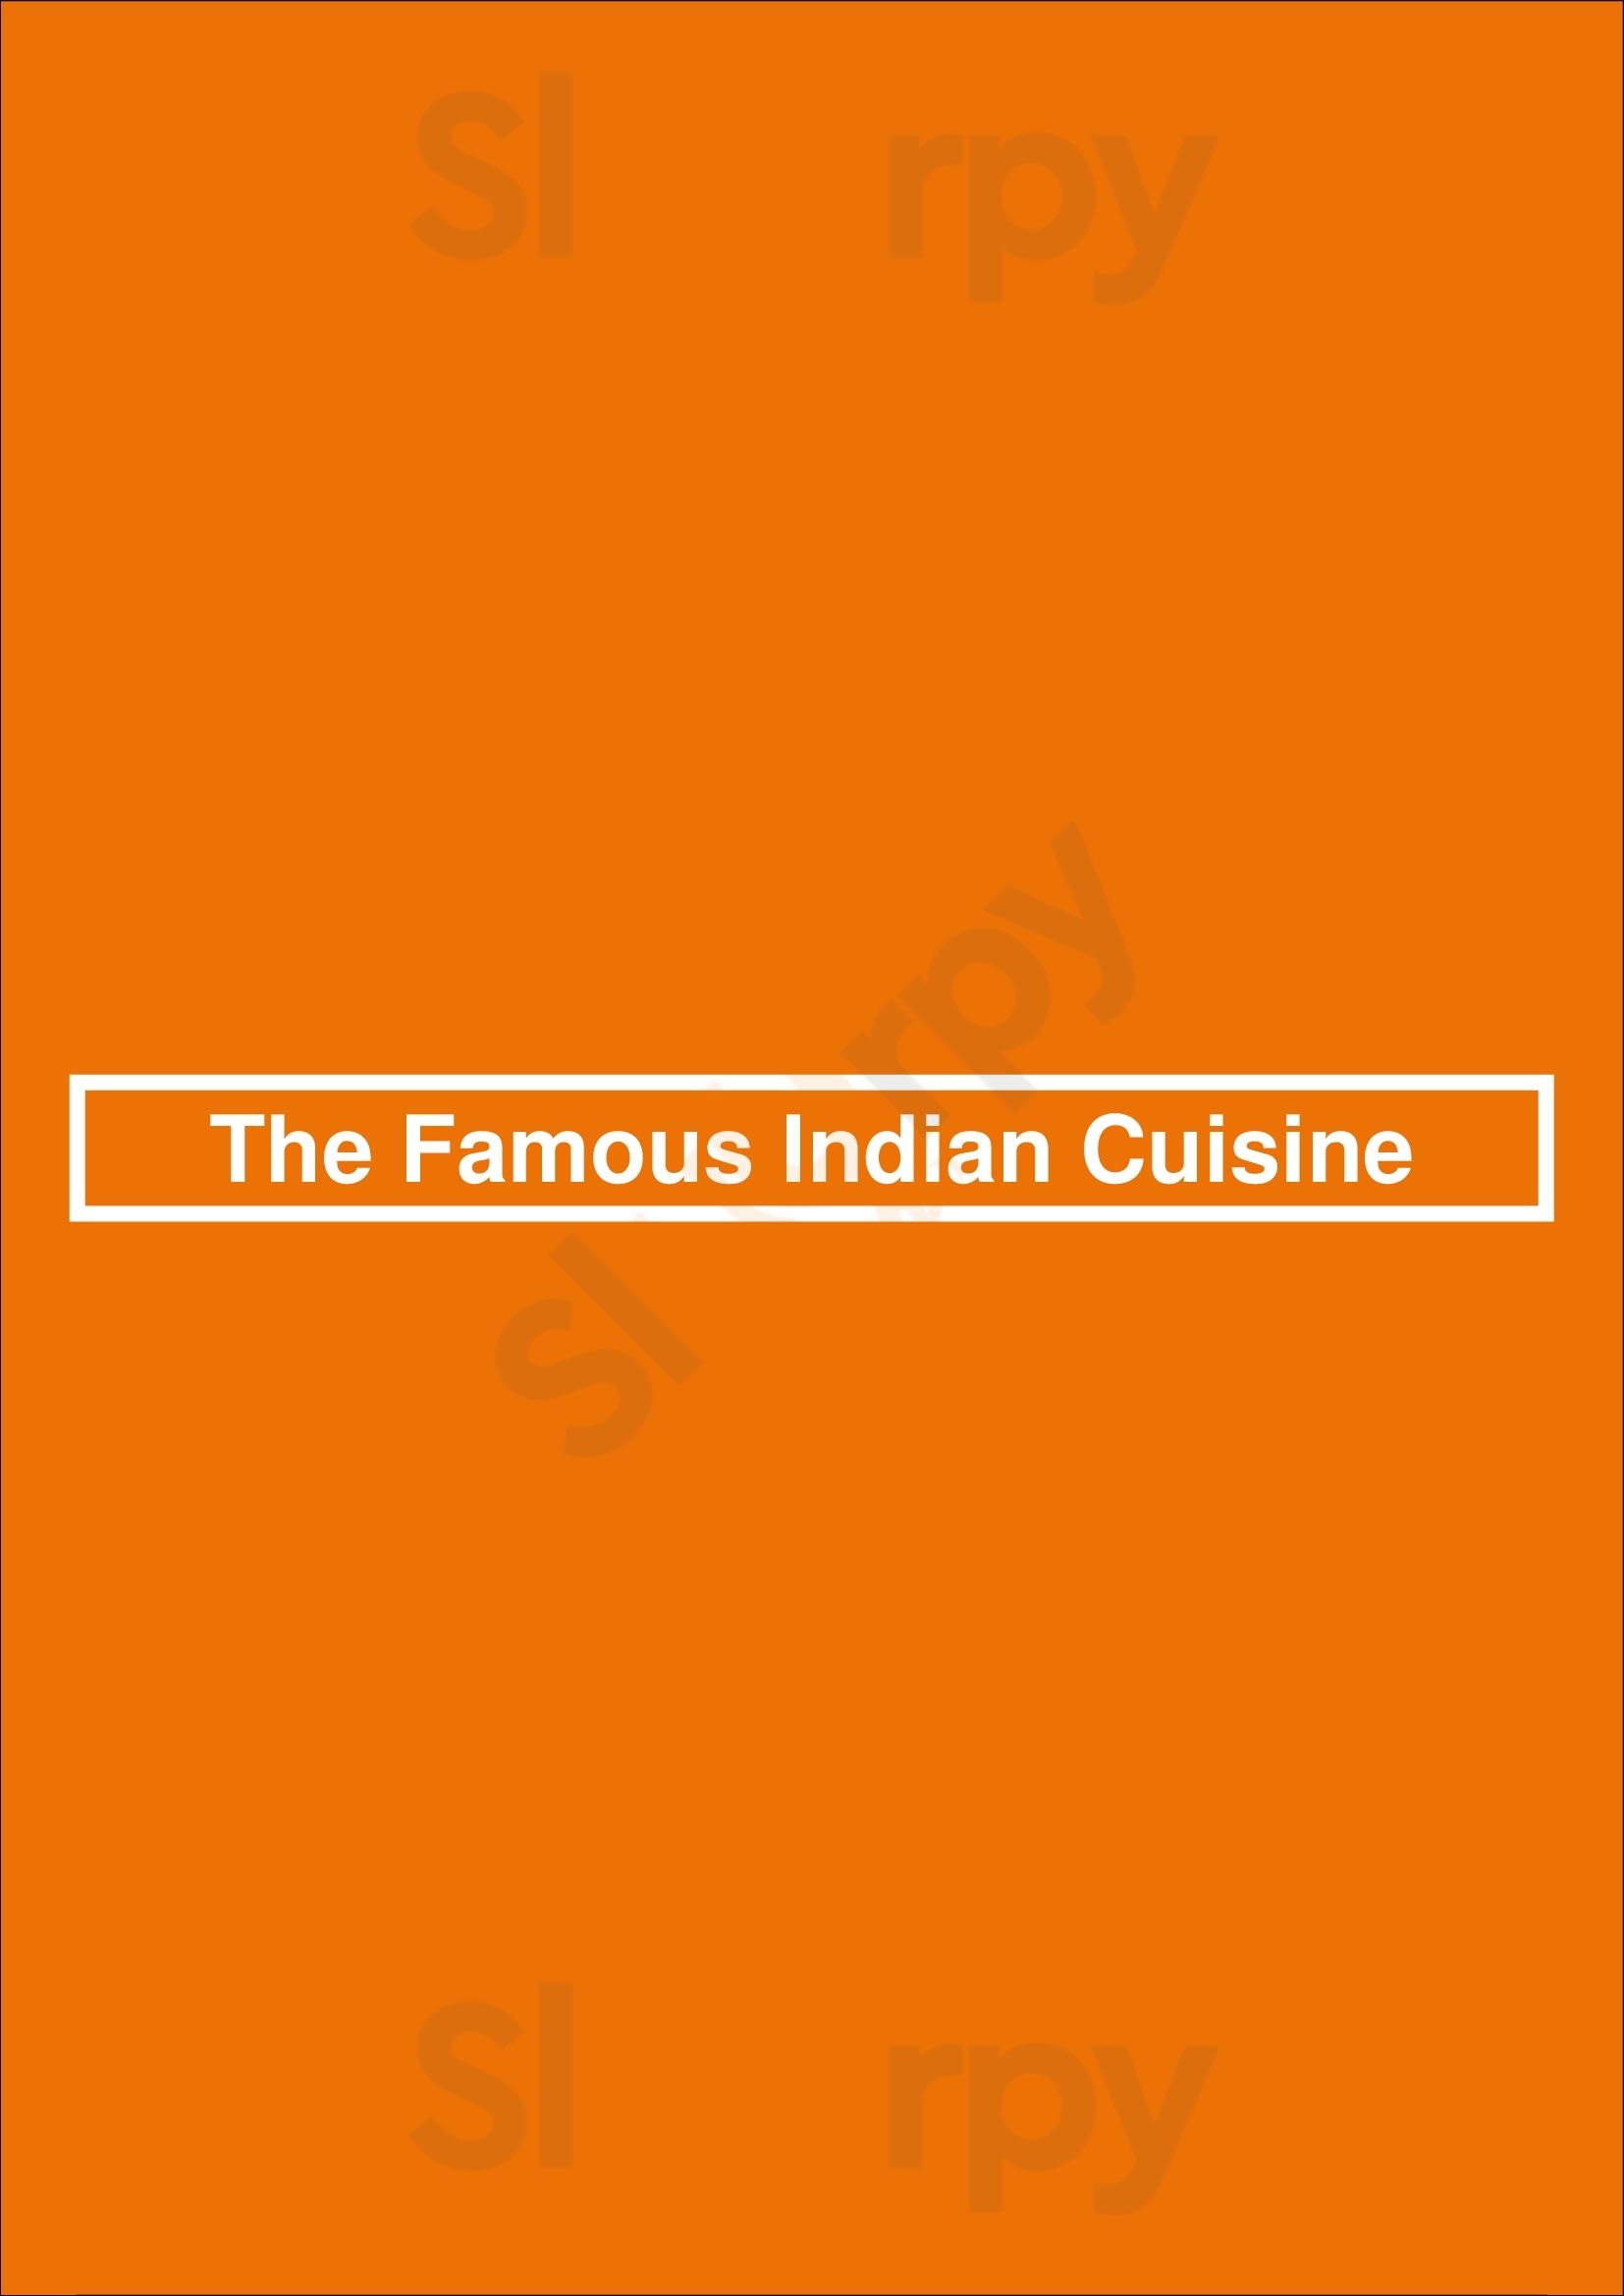 The Famous Indian Cuisine Toronto Menu - 1